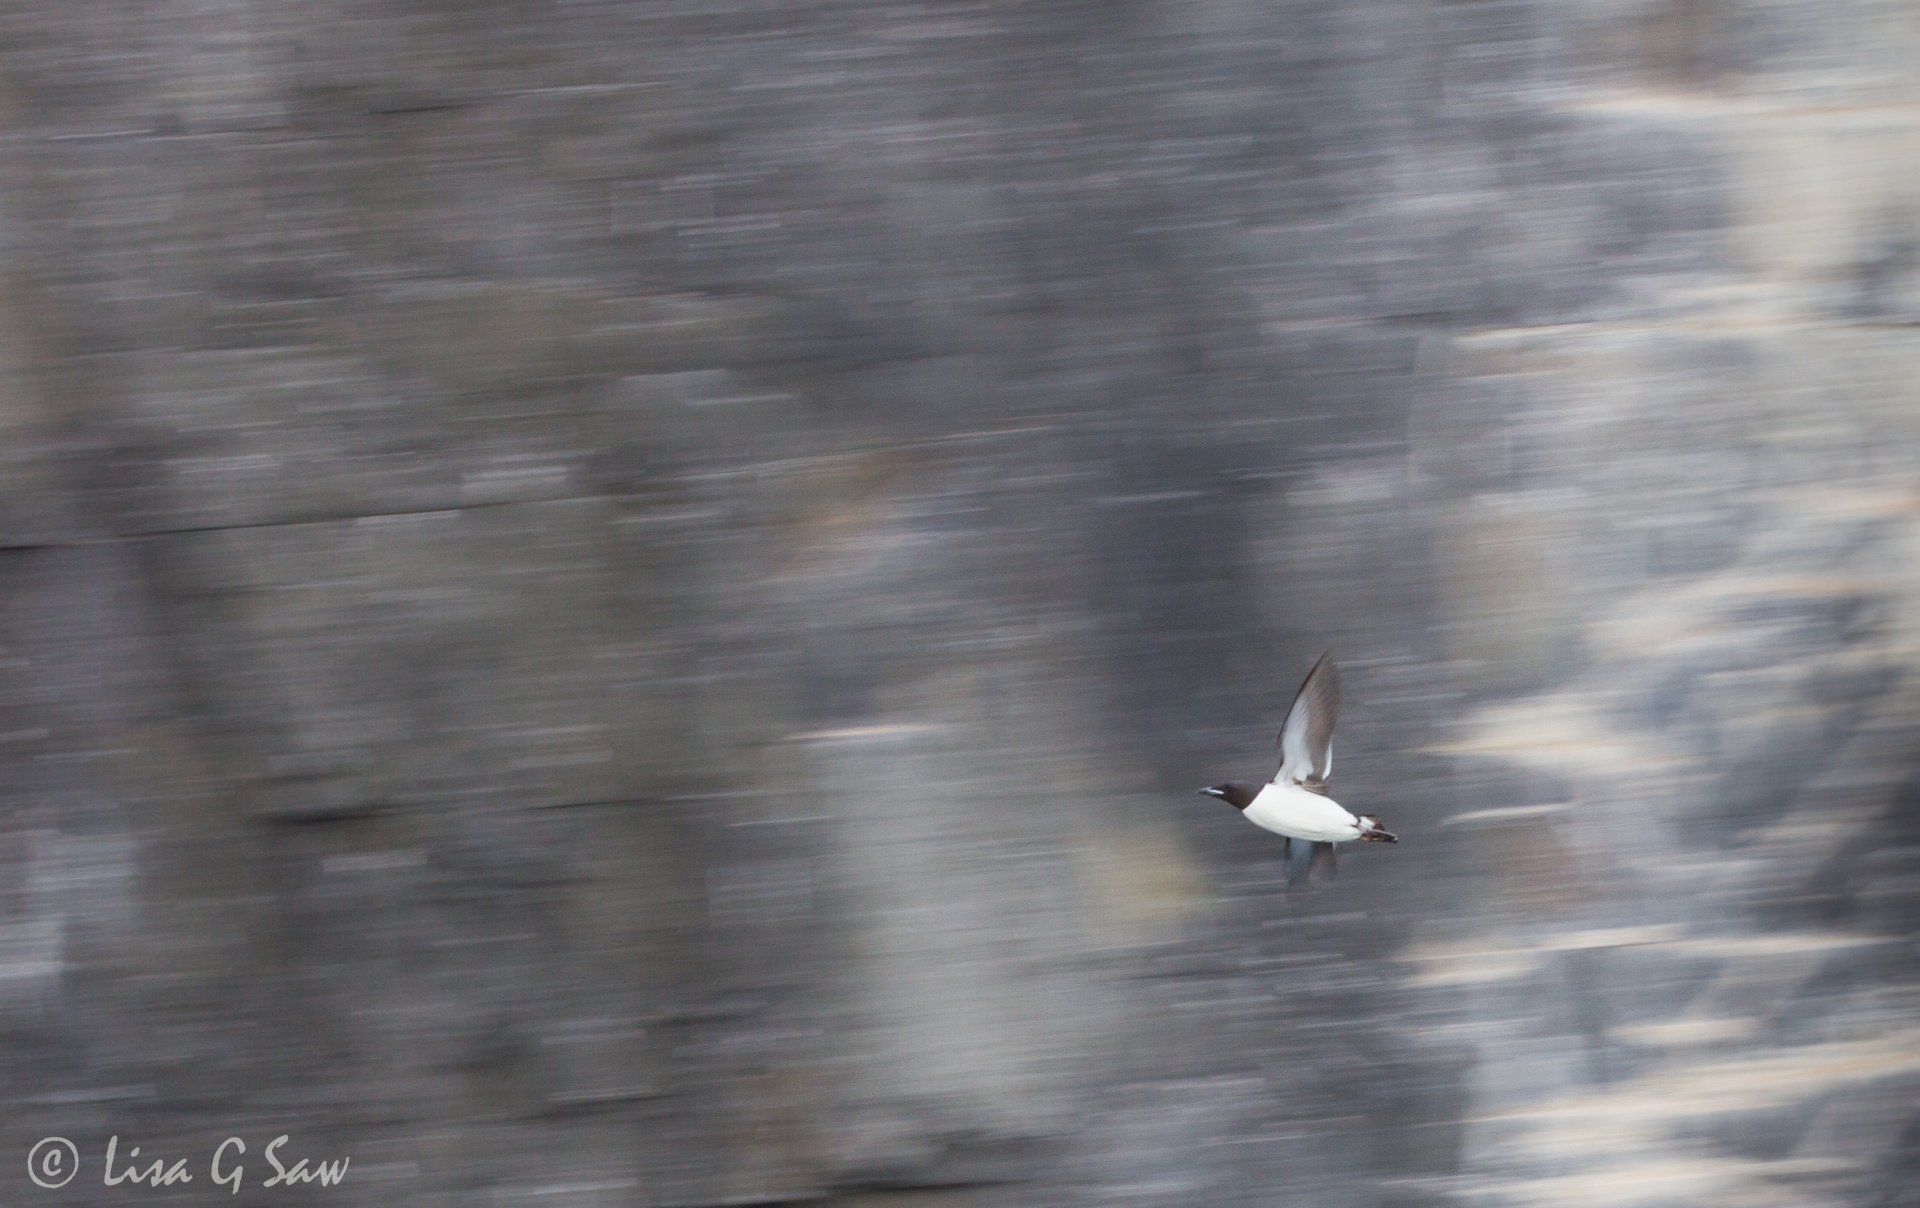 Slow pan of a Guillimot flying past Alkefjellet cliffs